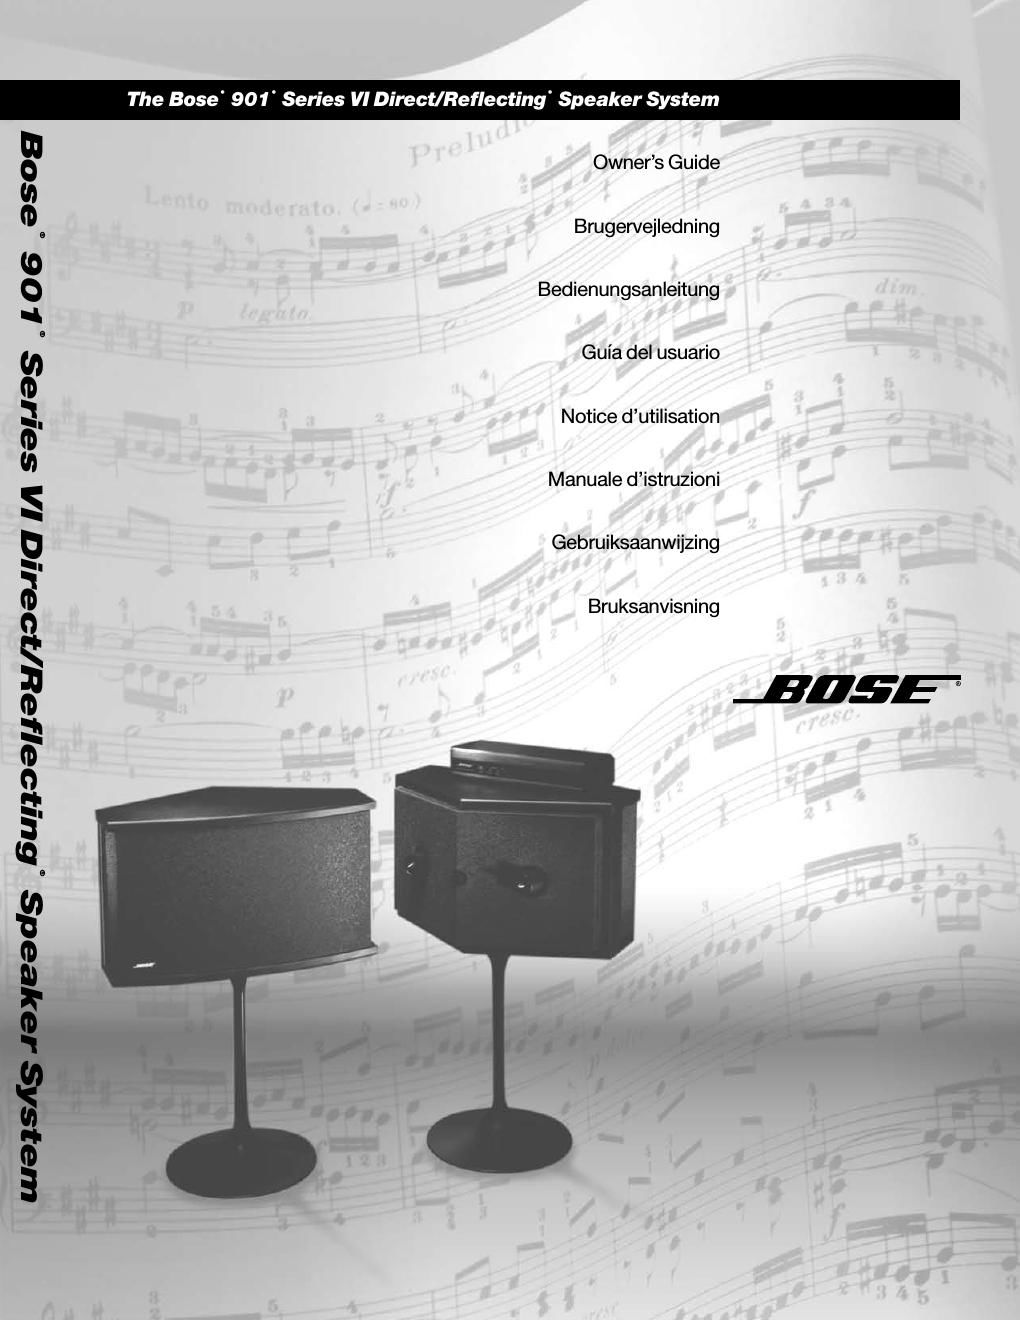 Bose 901 Series vi. Bose 901 service manual. 901 Direct/reflecting.